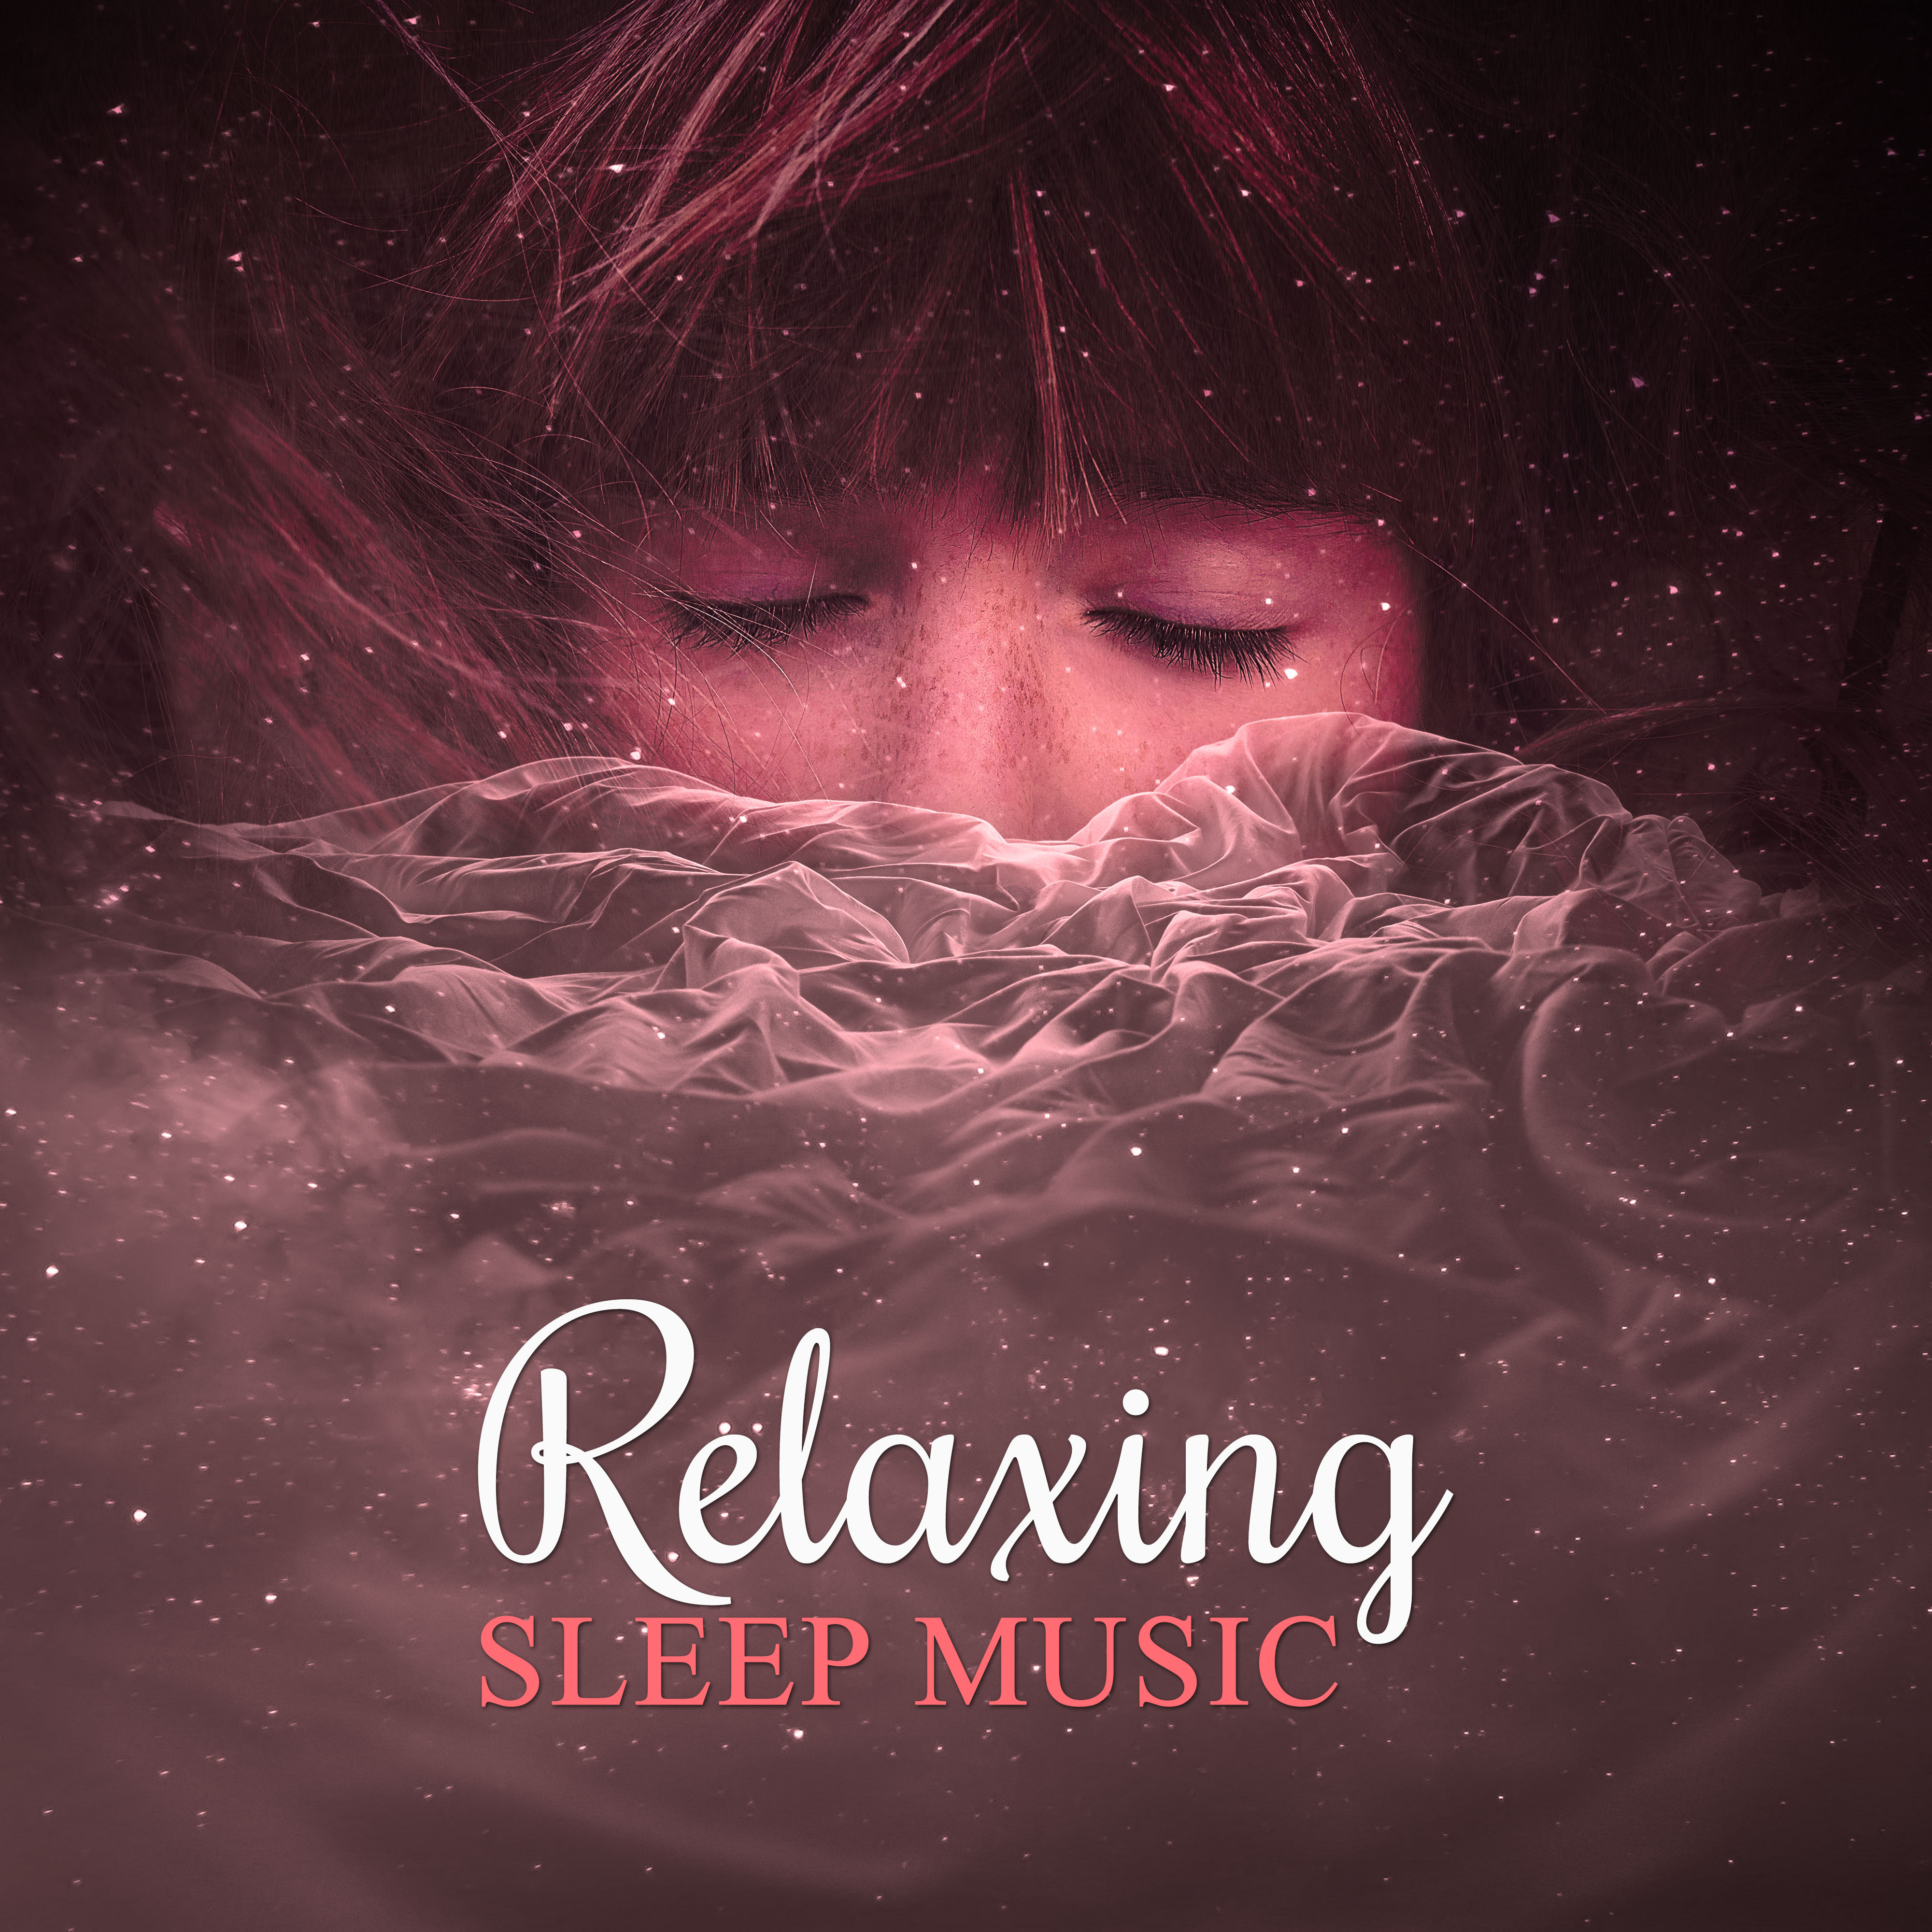 Relaxing Sleep Music – Beautiful Sounds of Nature, Sleep Music to Help You Easily Fall Asleep & Have a Nice Dream